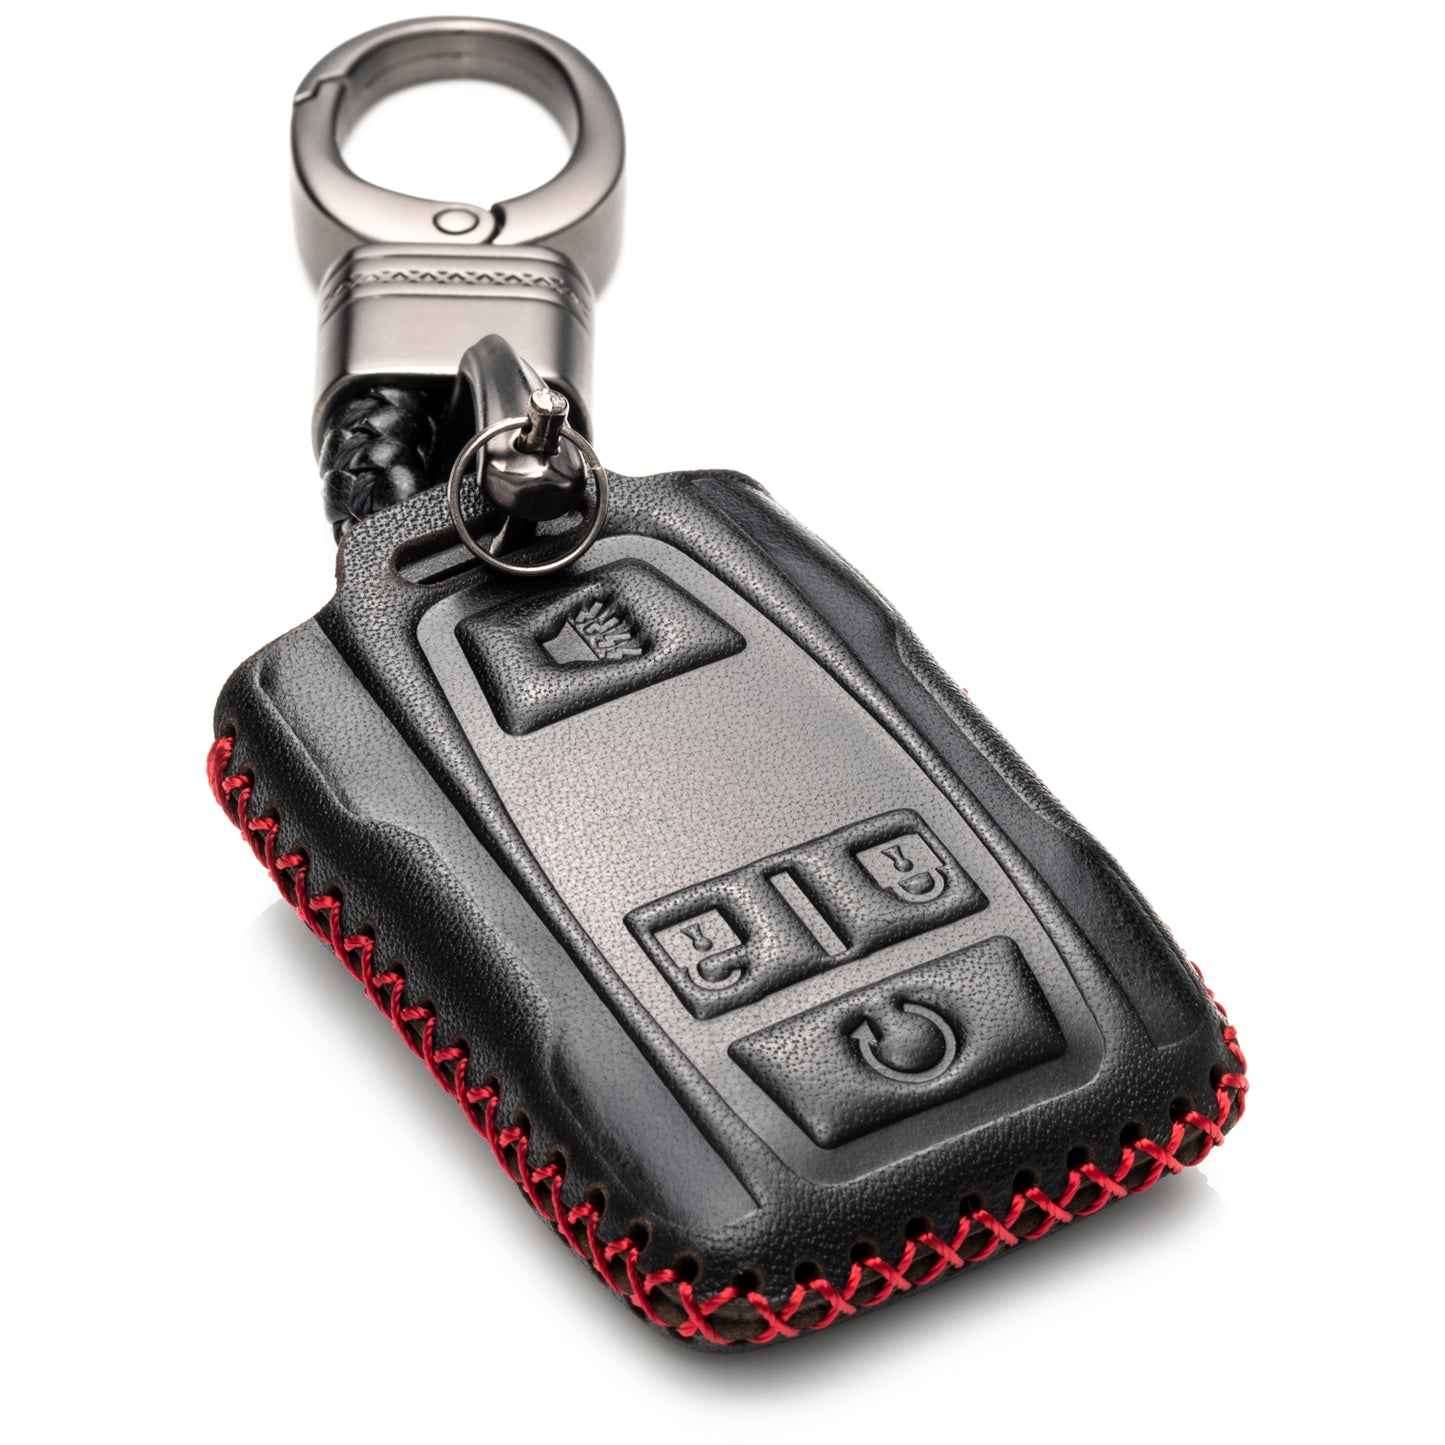 Vitodeco 4-Button Genuine Leather Key Fob Case Cover Compatible for 2019-2021 GMC Sierra, Canyon, Chevy Silverado 1500, Tahoe, Colorado, Suburban